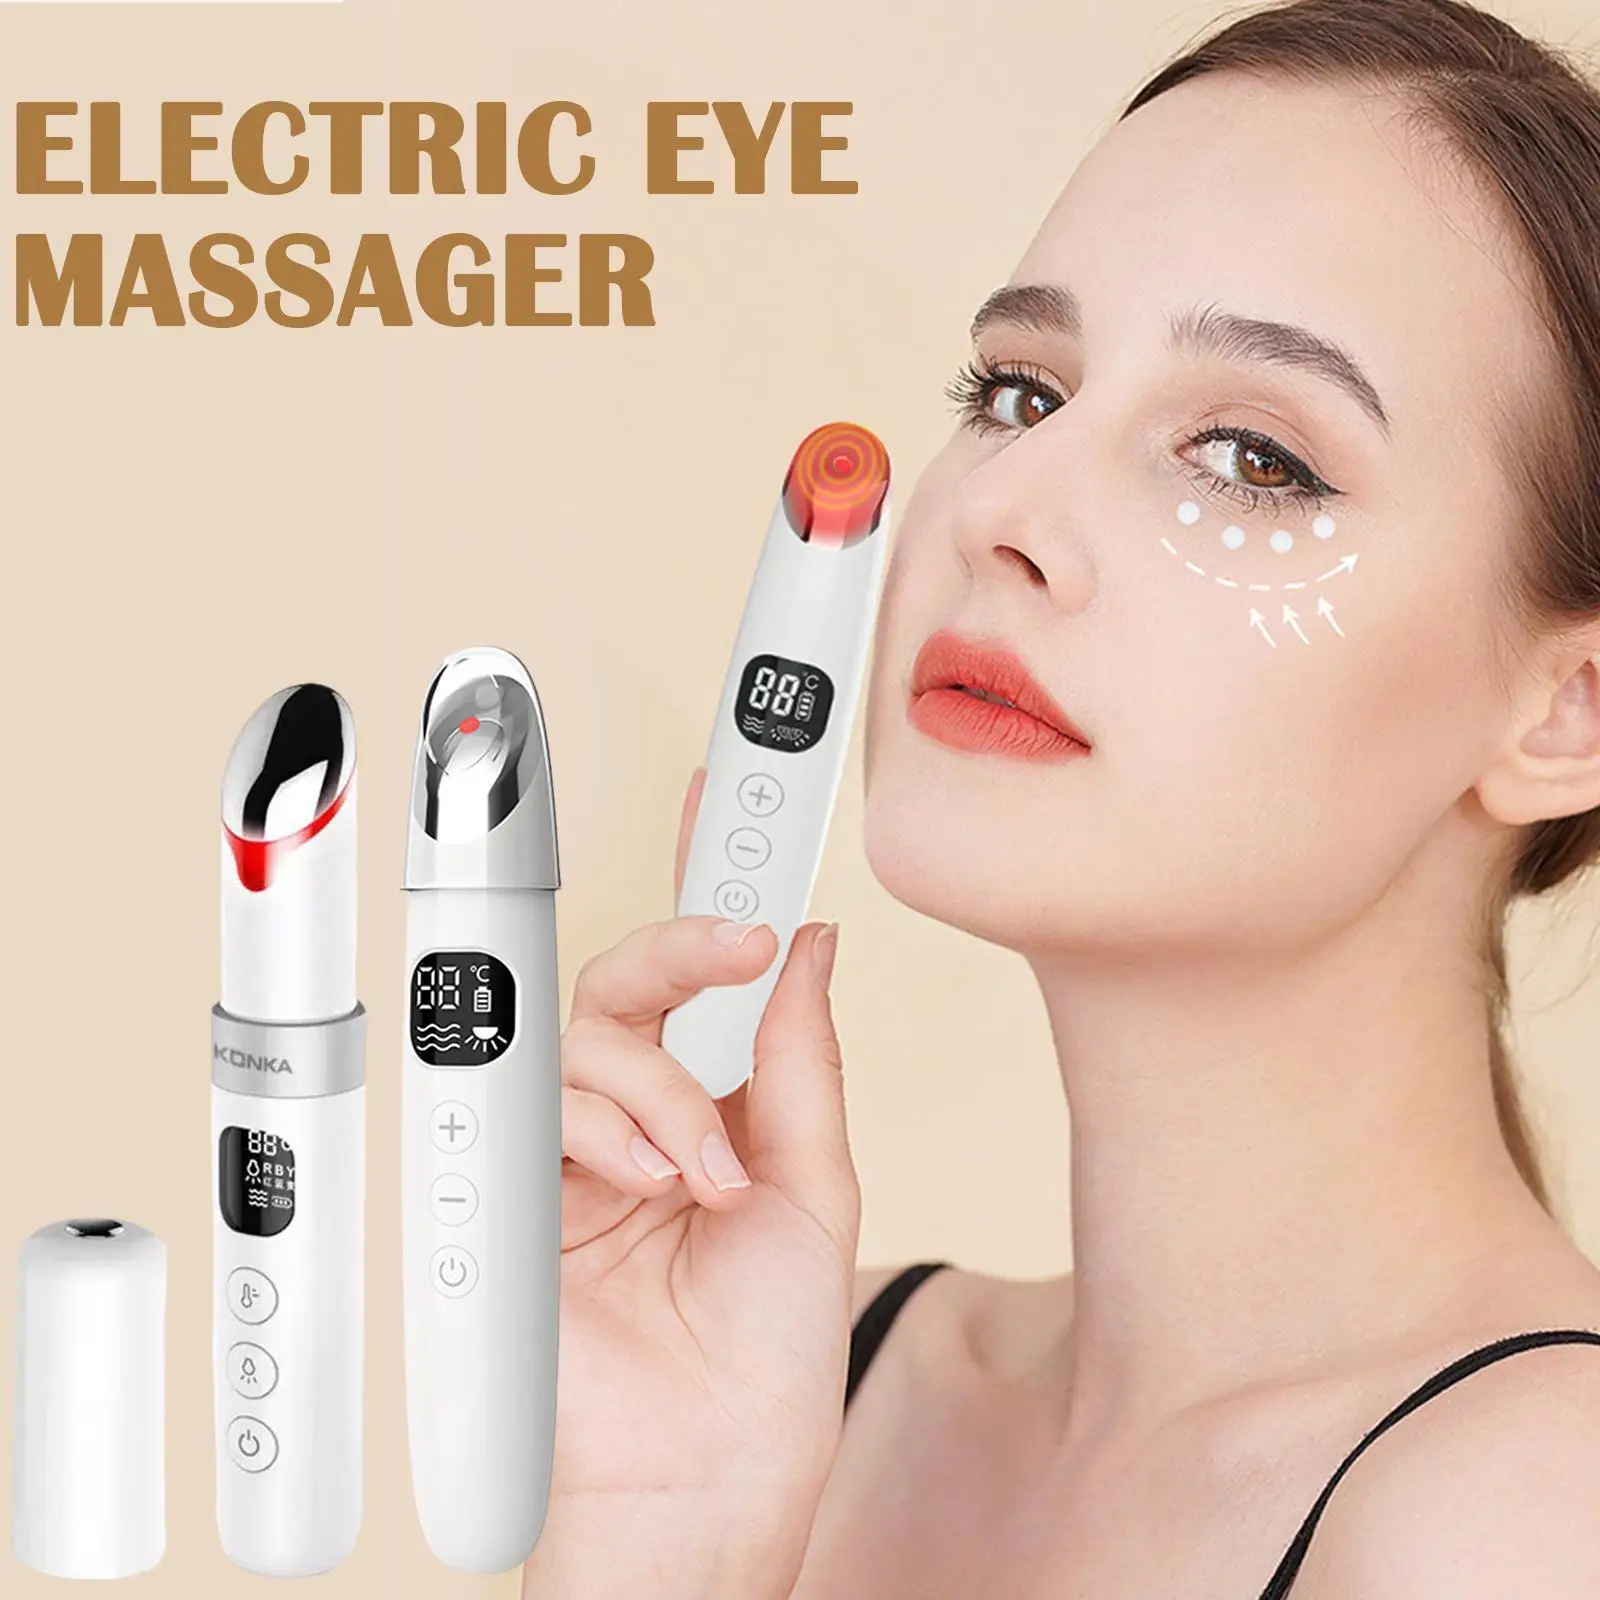 

Electric Eye Massager EMS Eye Skin Lift Anti Age Wrinkle Massage Vibration Care Therapy Skin 45℃ Hot Photo Tool Eyes Relax M1O7